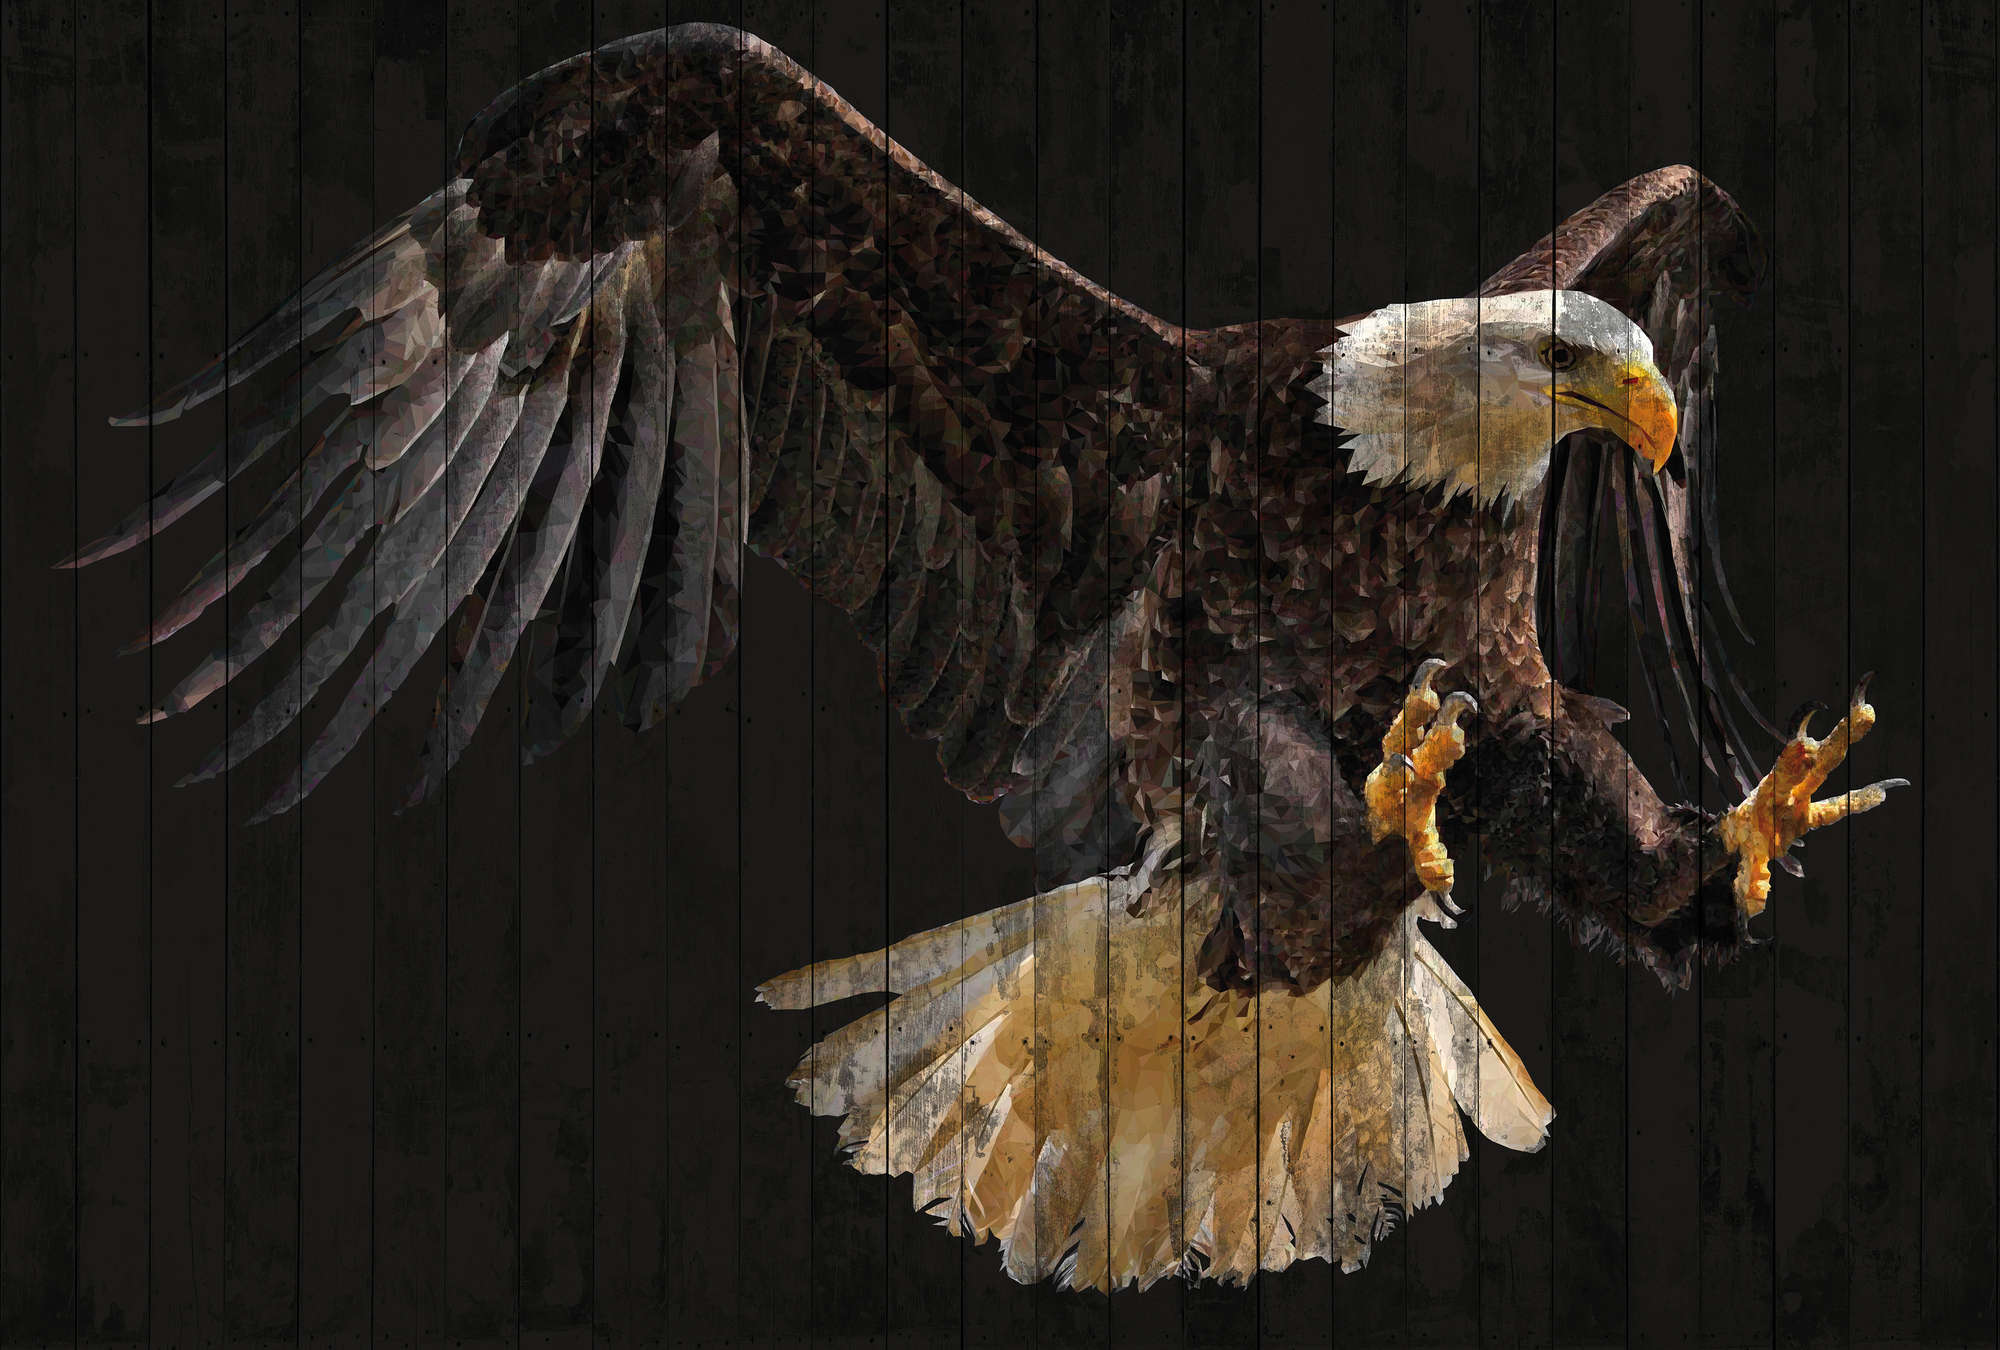             Photo wallpaper eagle, animal motif & wood look - brown, orange, black
        